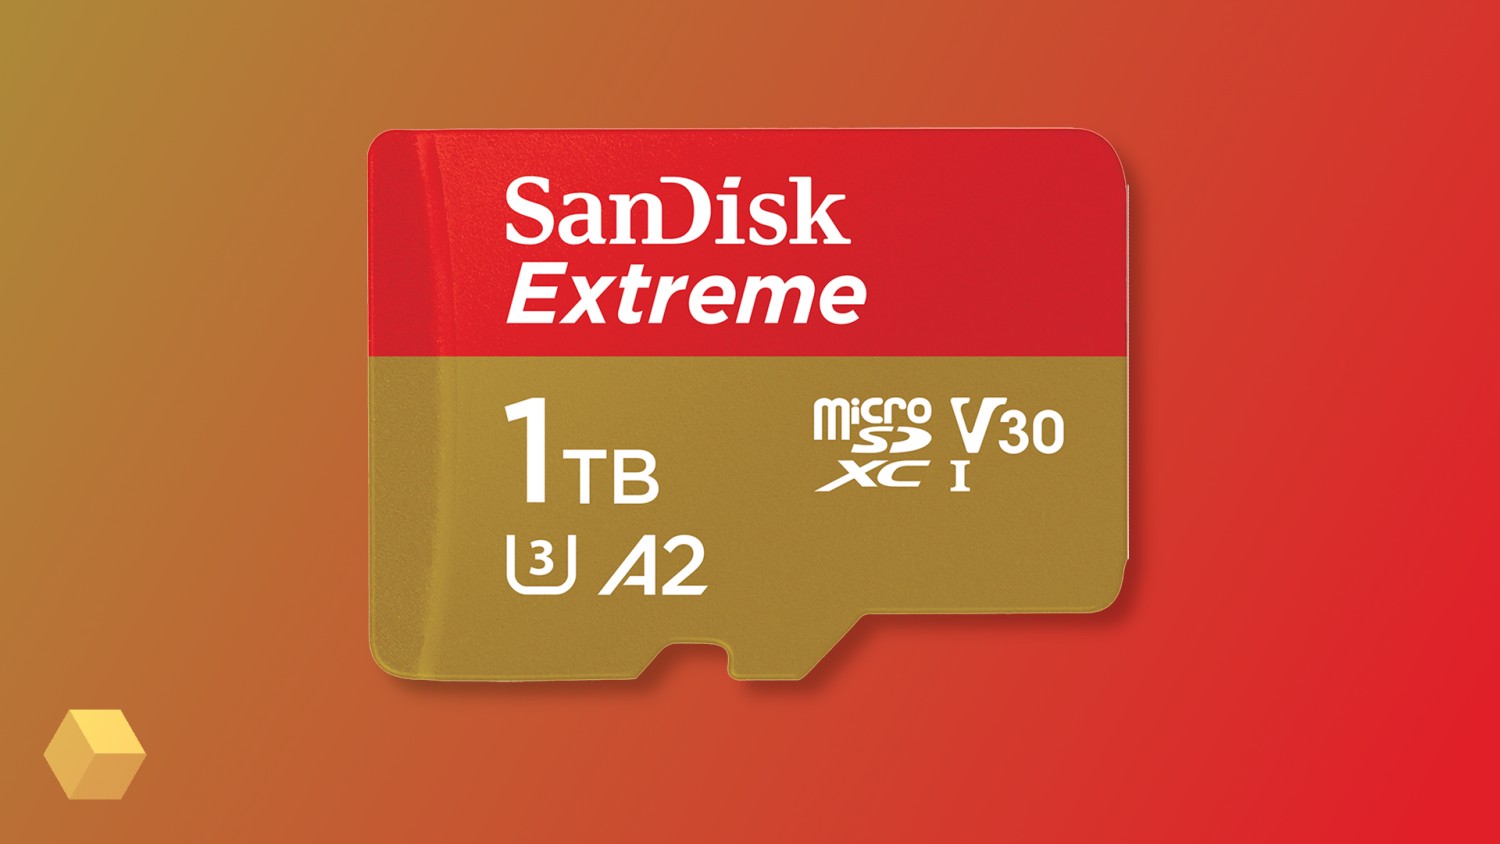 SanDisk начала продажи microSD с 1 ТБ памяти